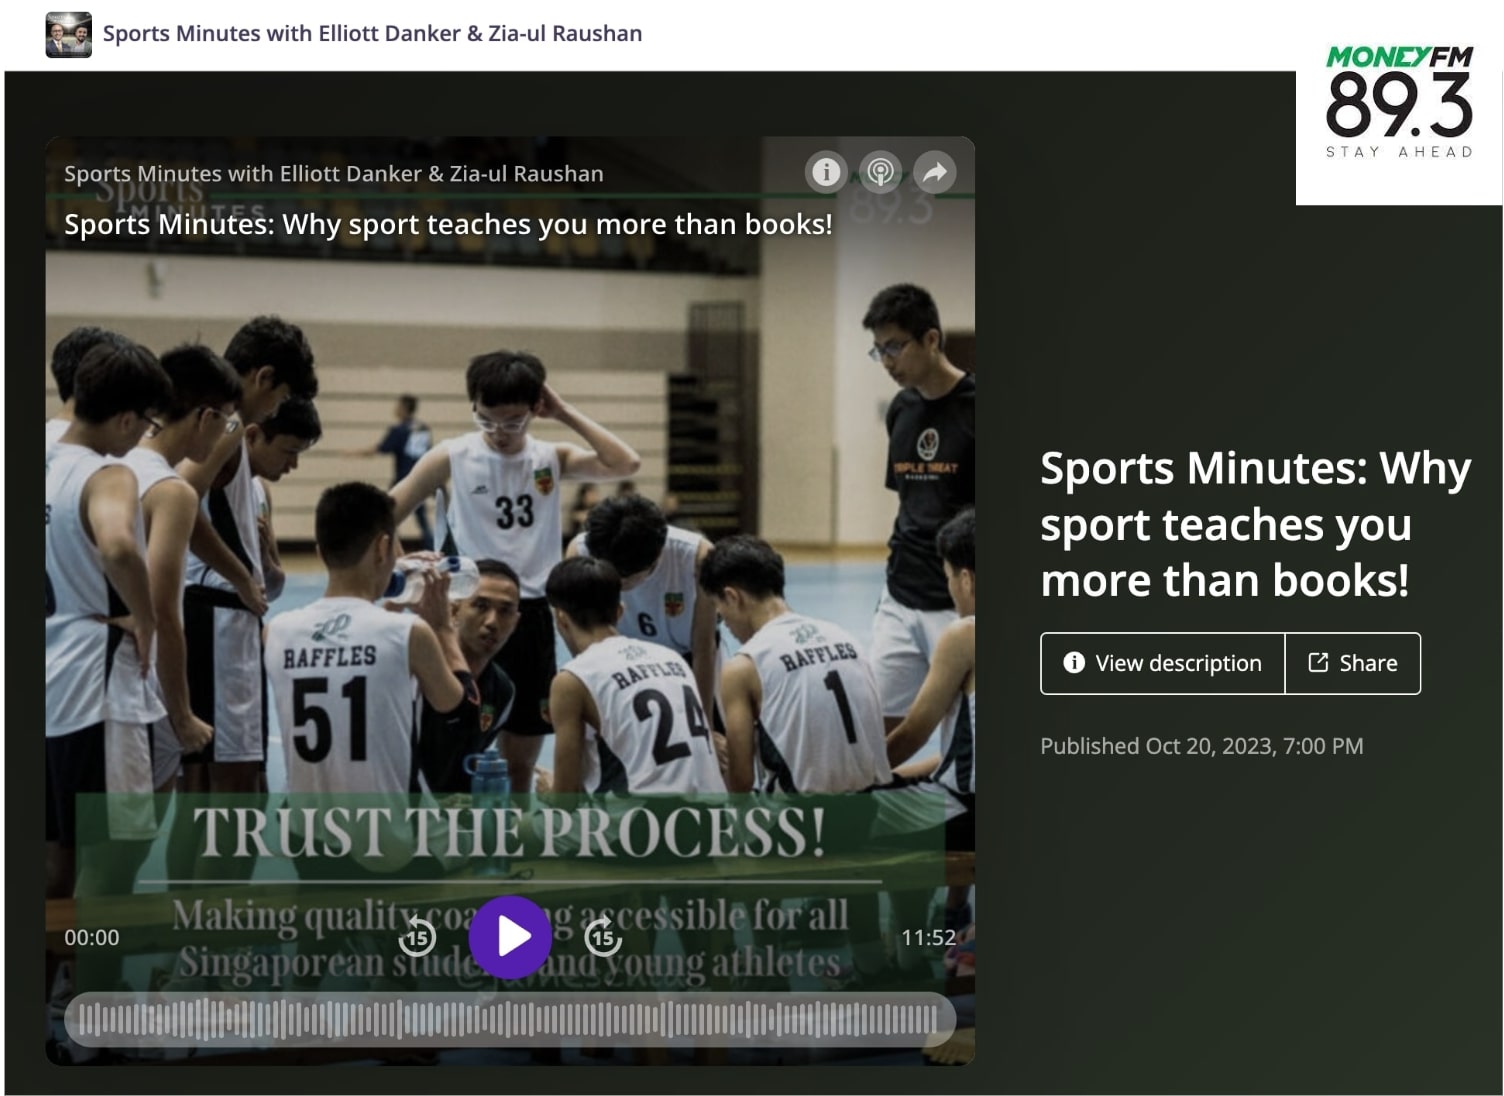 Football Academy Singapore Feature MoneyFM 89.3